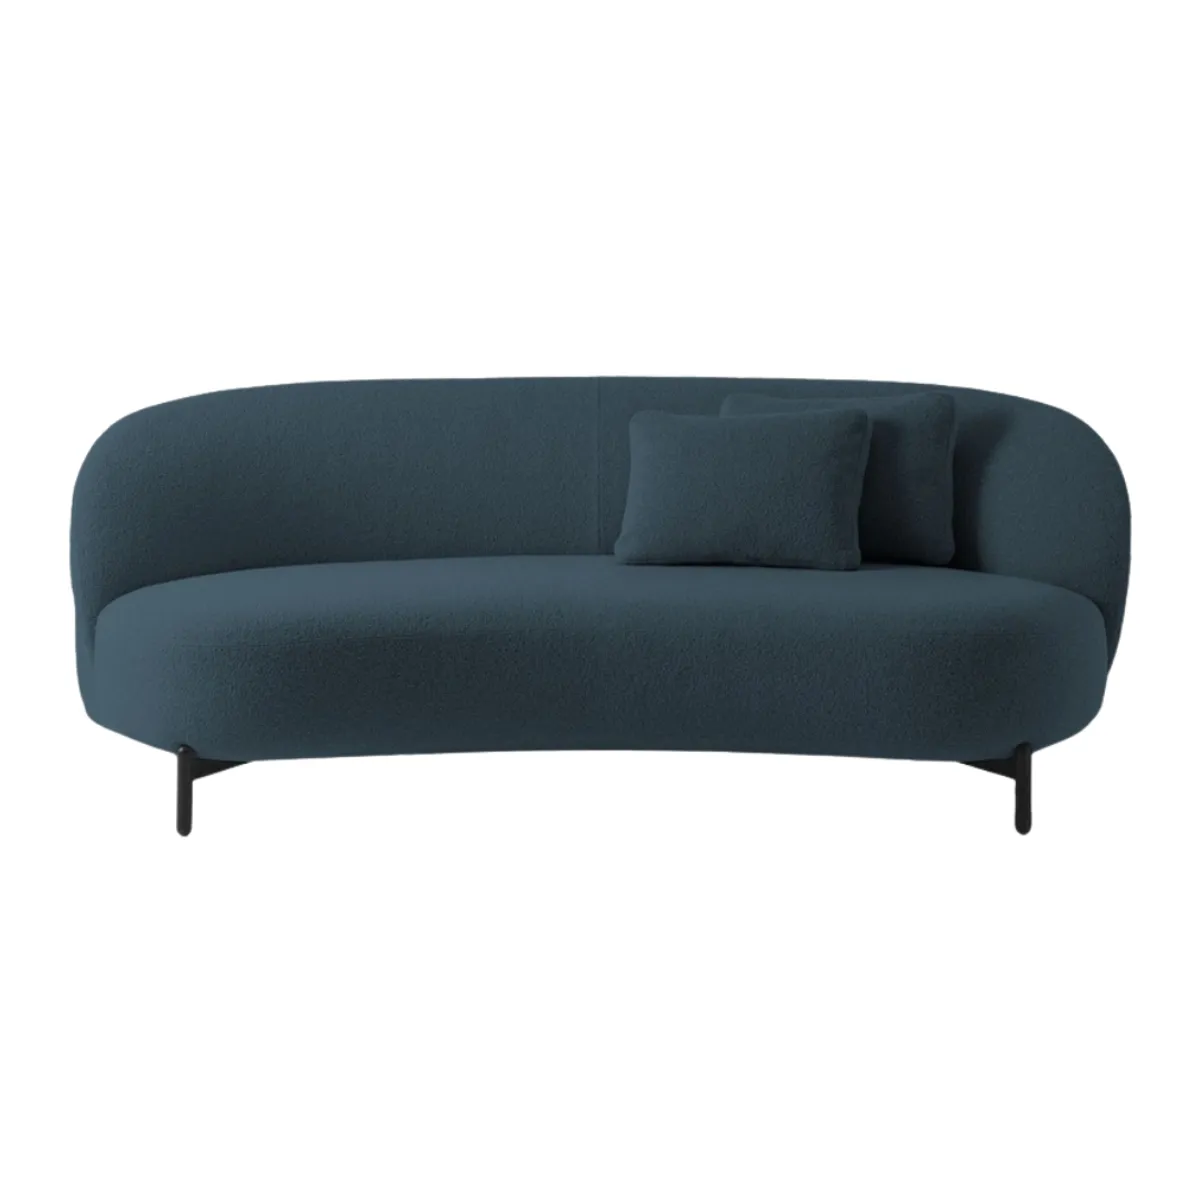 Kingsley sofa 8